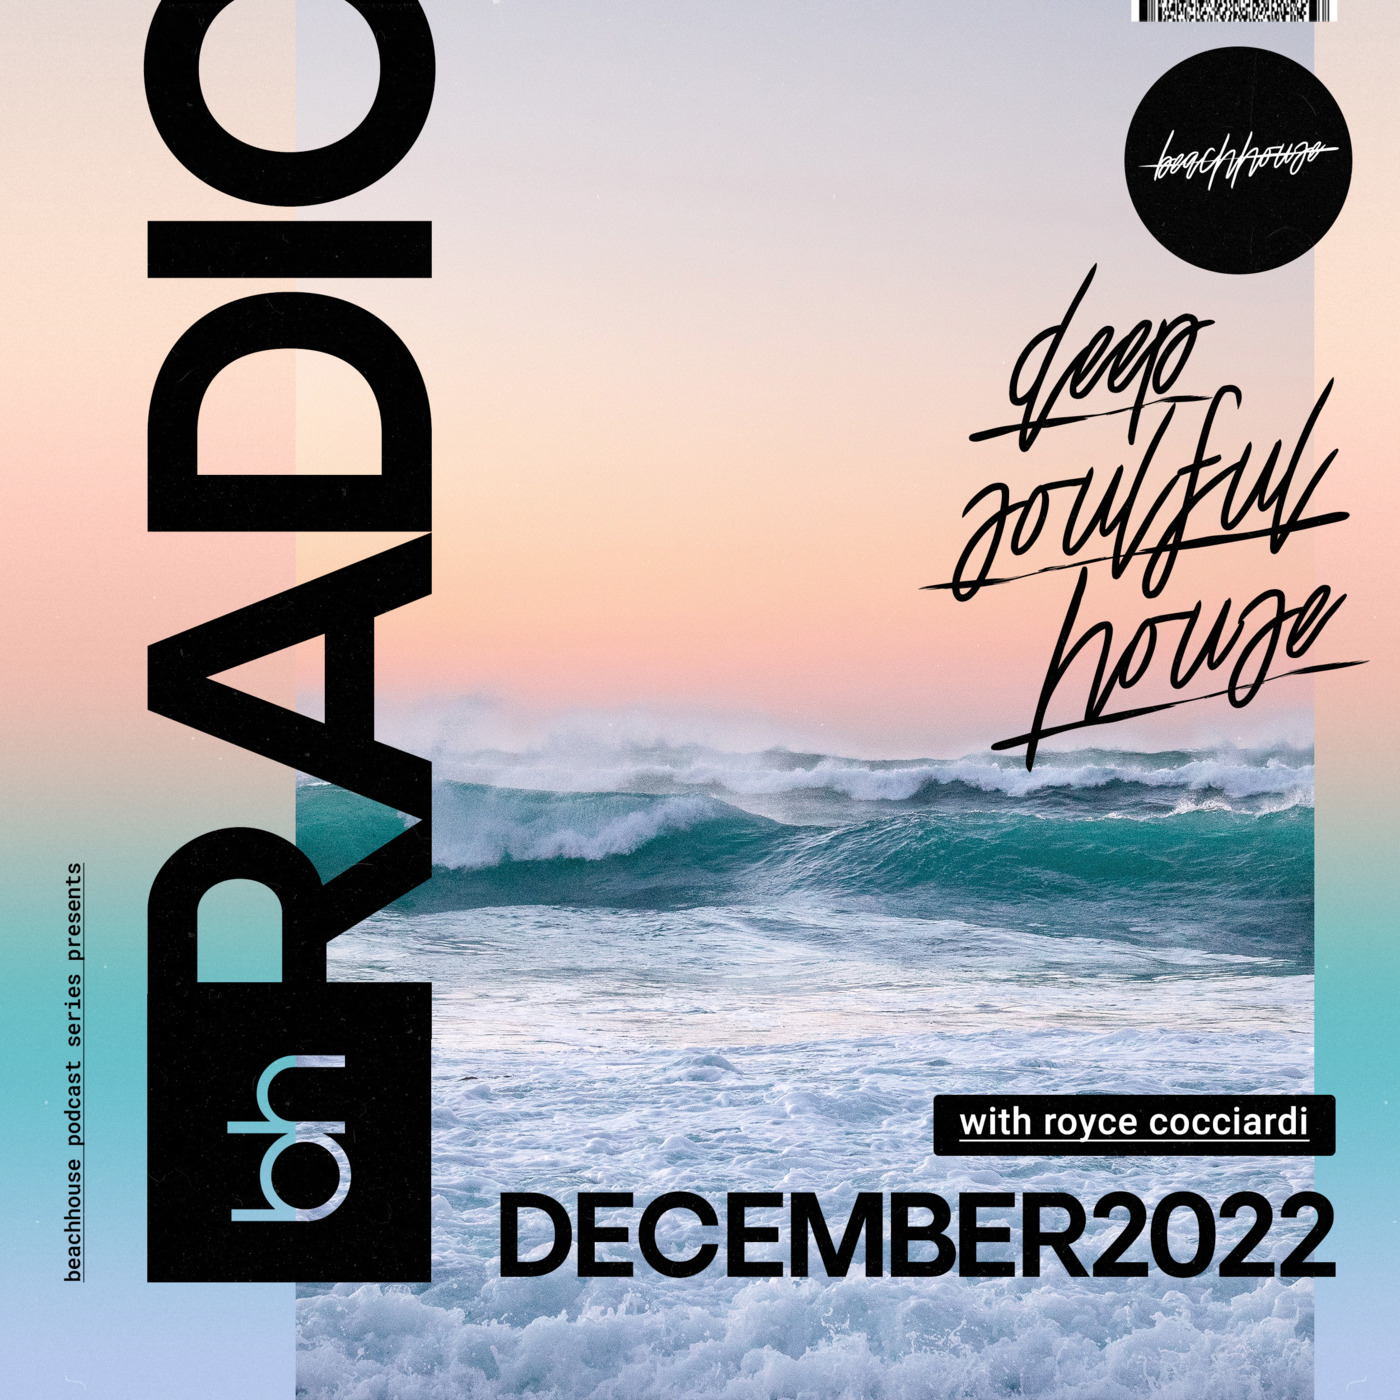 Beachhouse RADIO - December 2022 - with Royce Cocciardi